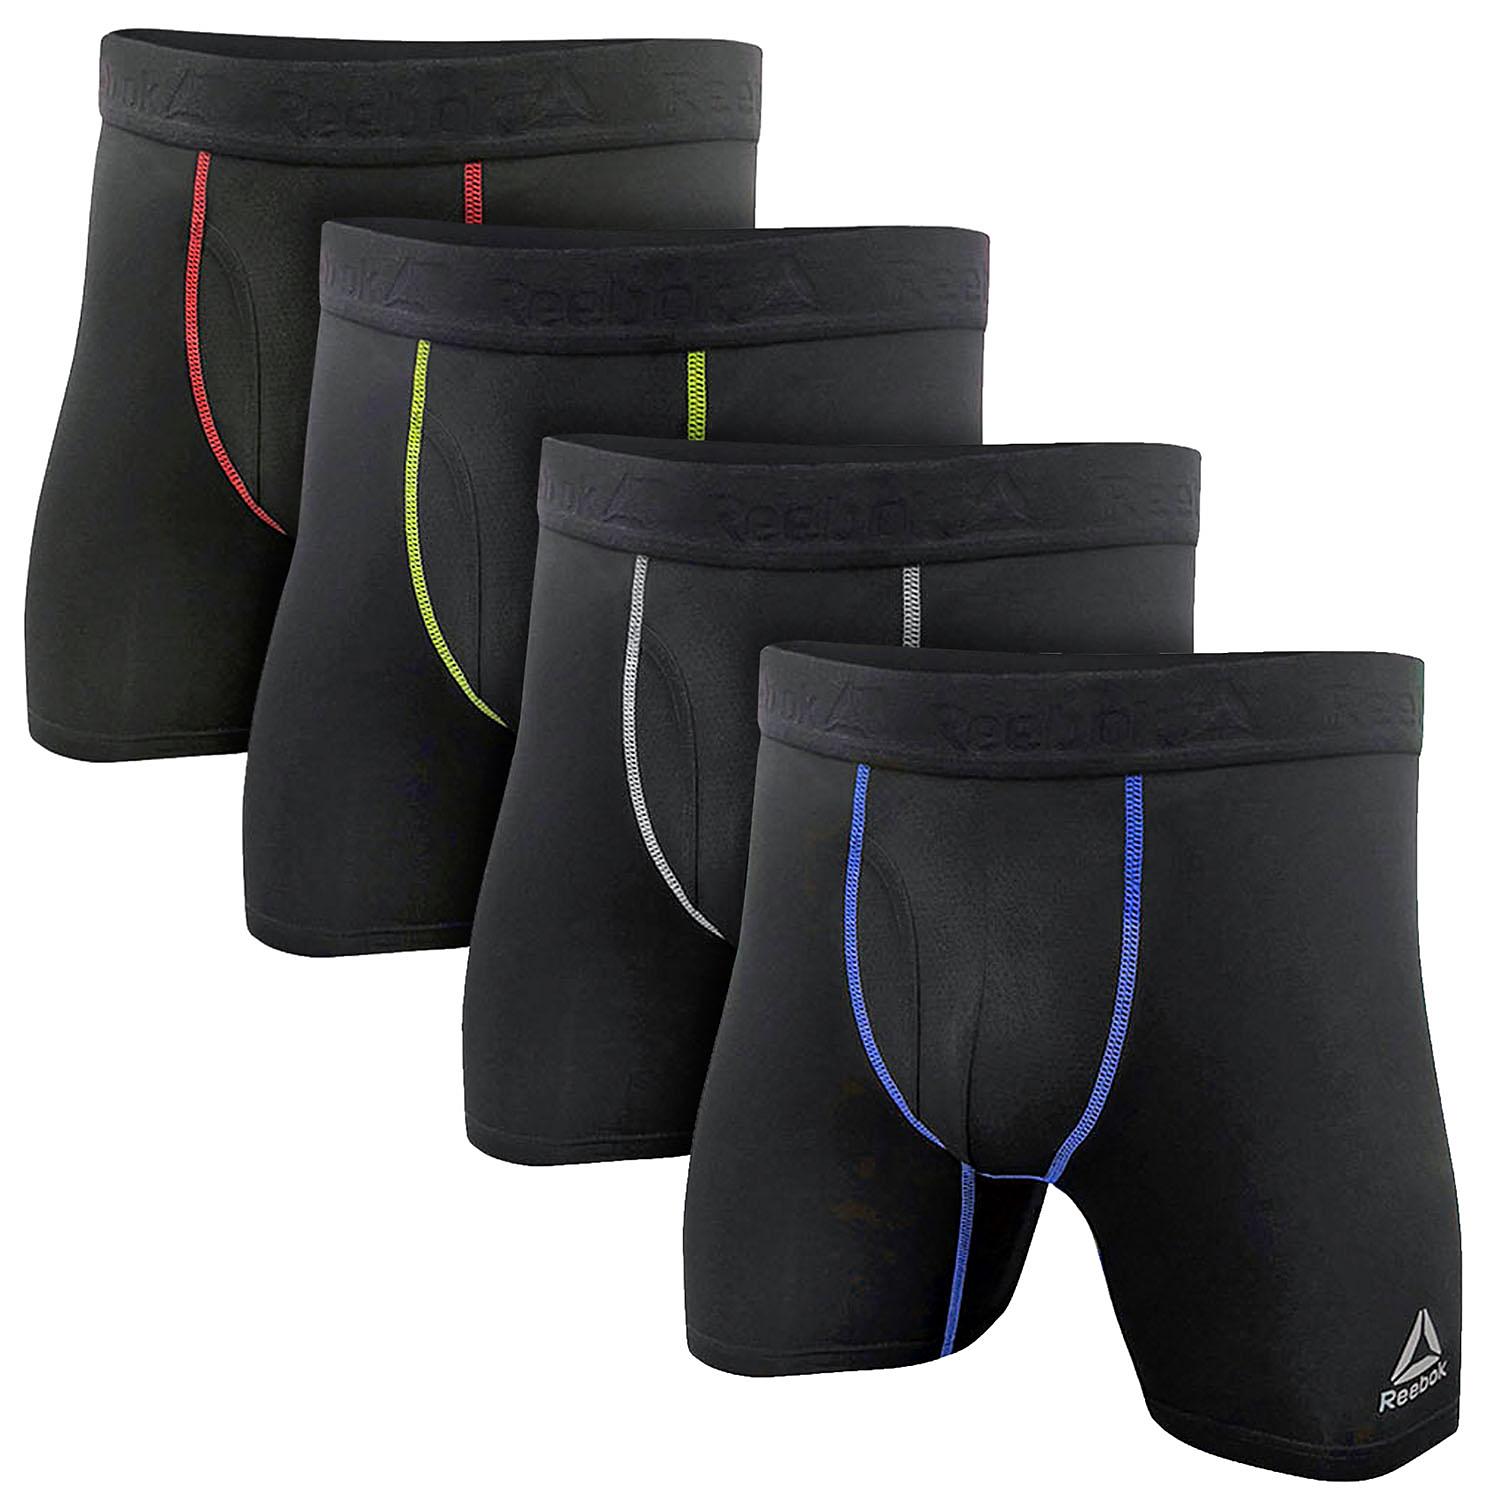 Reebok Men's Underwear - Performance Boxer Briefs (4 Pack) (Black/Black/Black/Black, Small)'